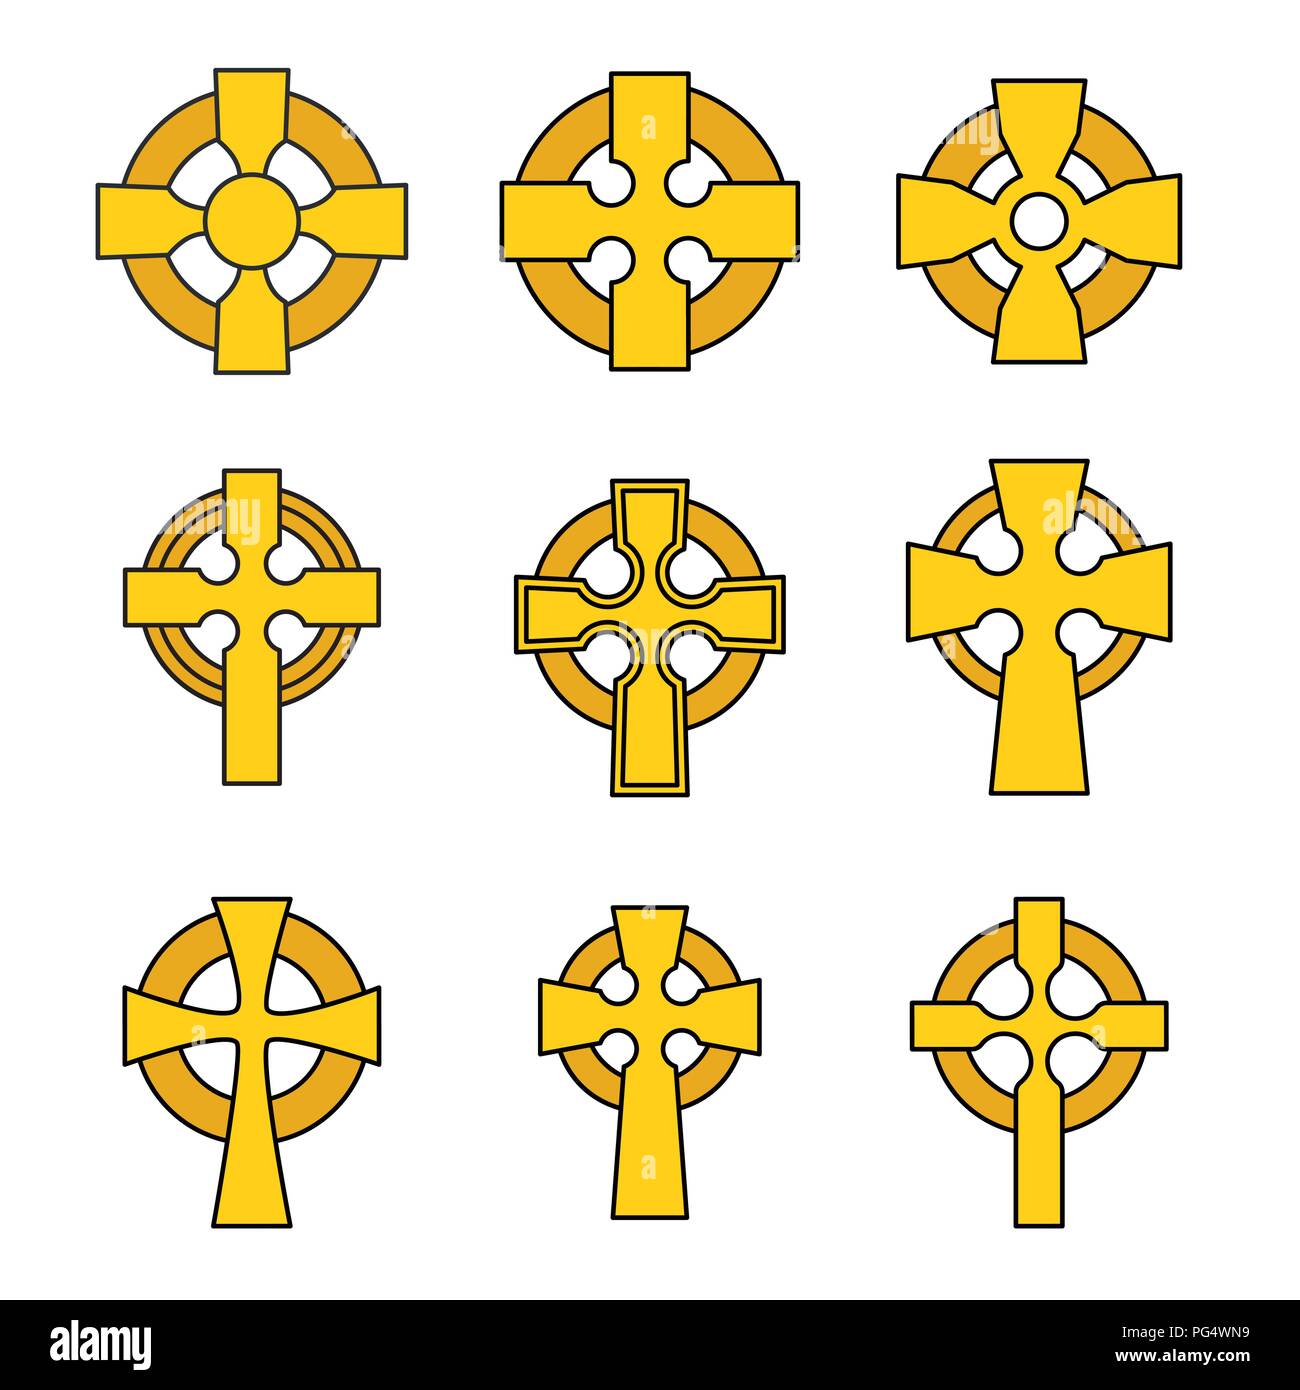 Der Keltische Kreuze Fur Religiose Design Irische Schottische Celtic Cross Sign Collection Stock Vektorgrafik Alamy